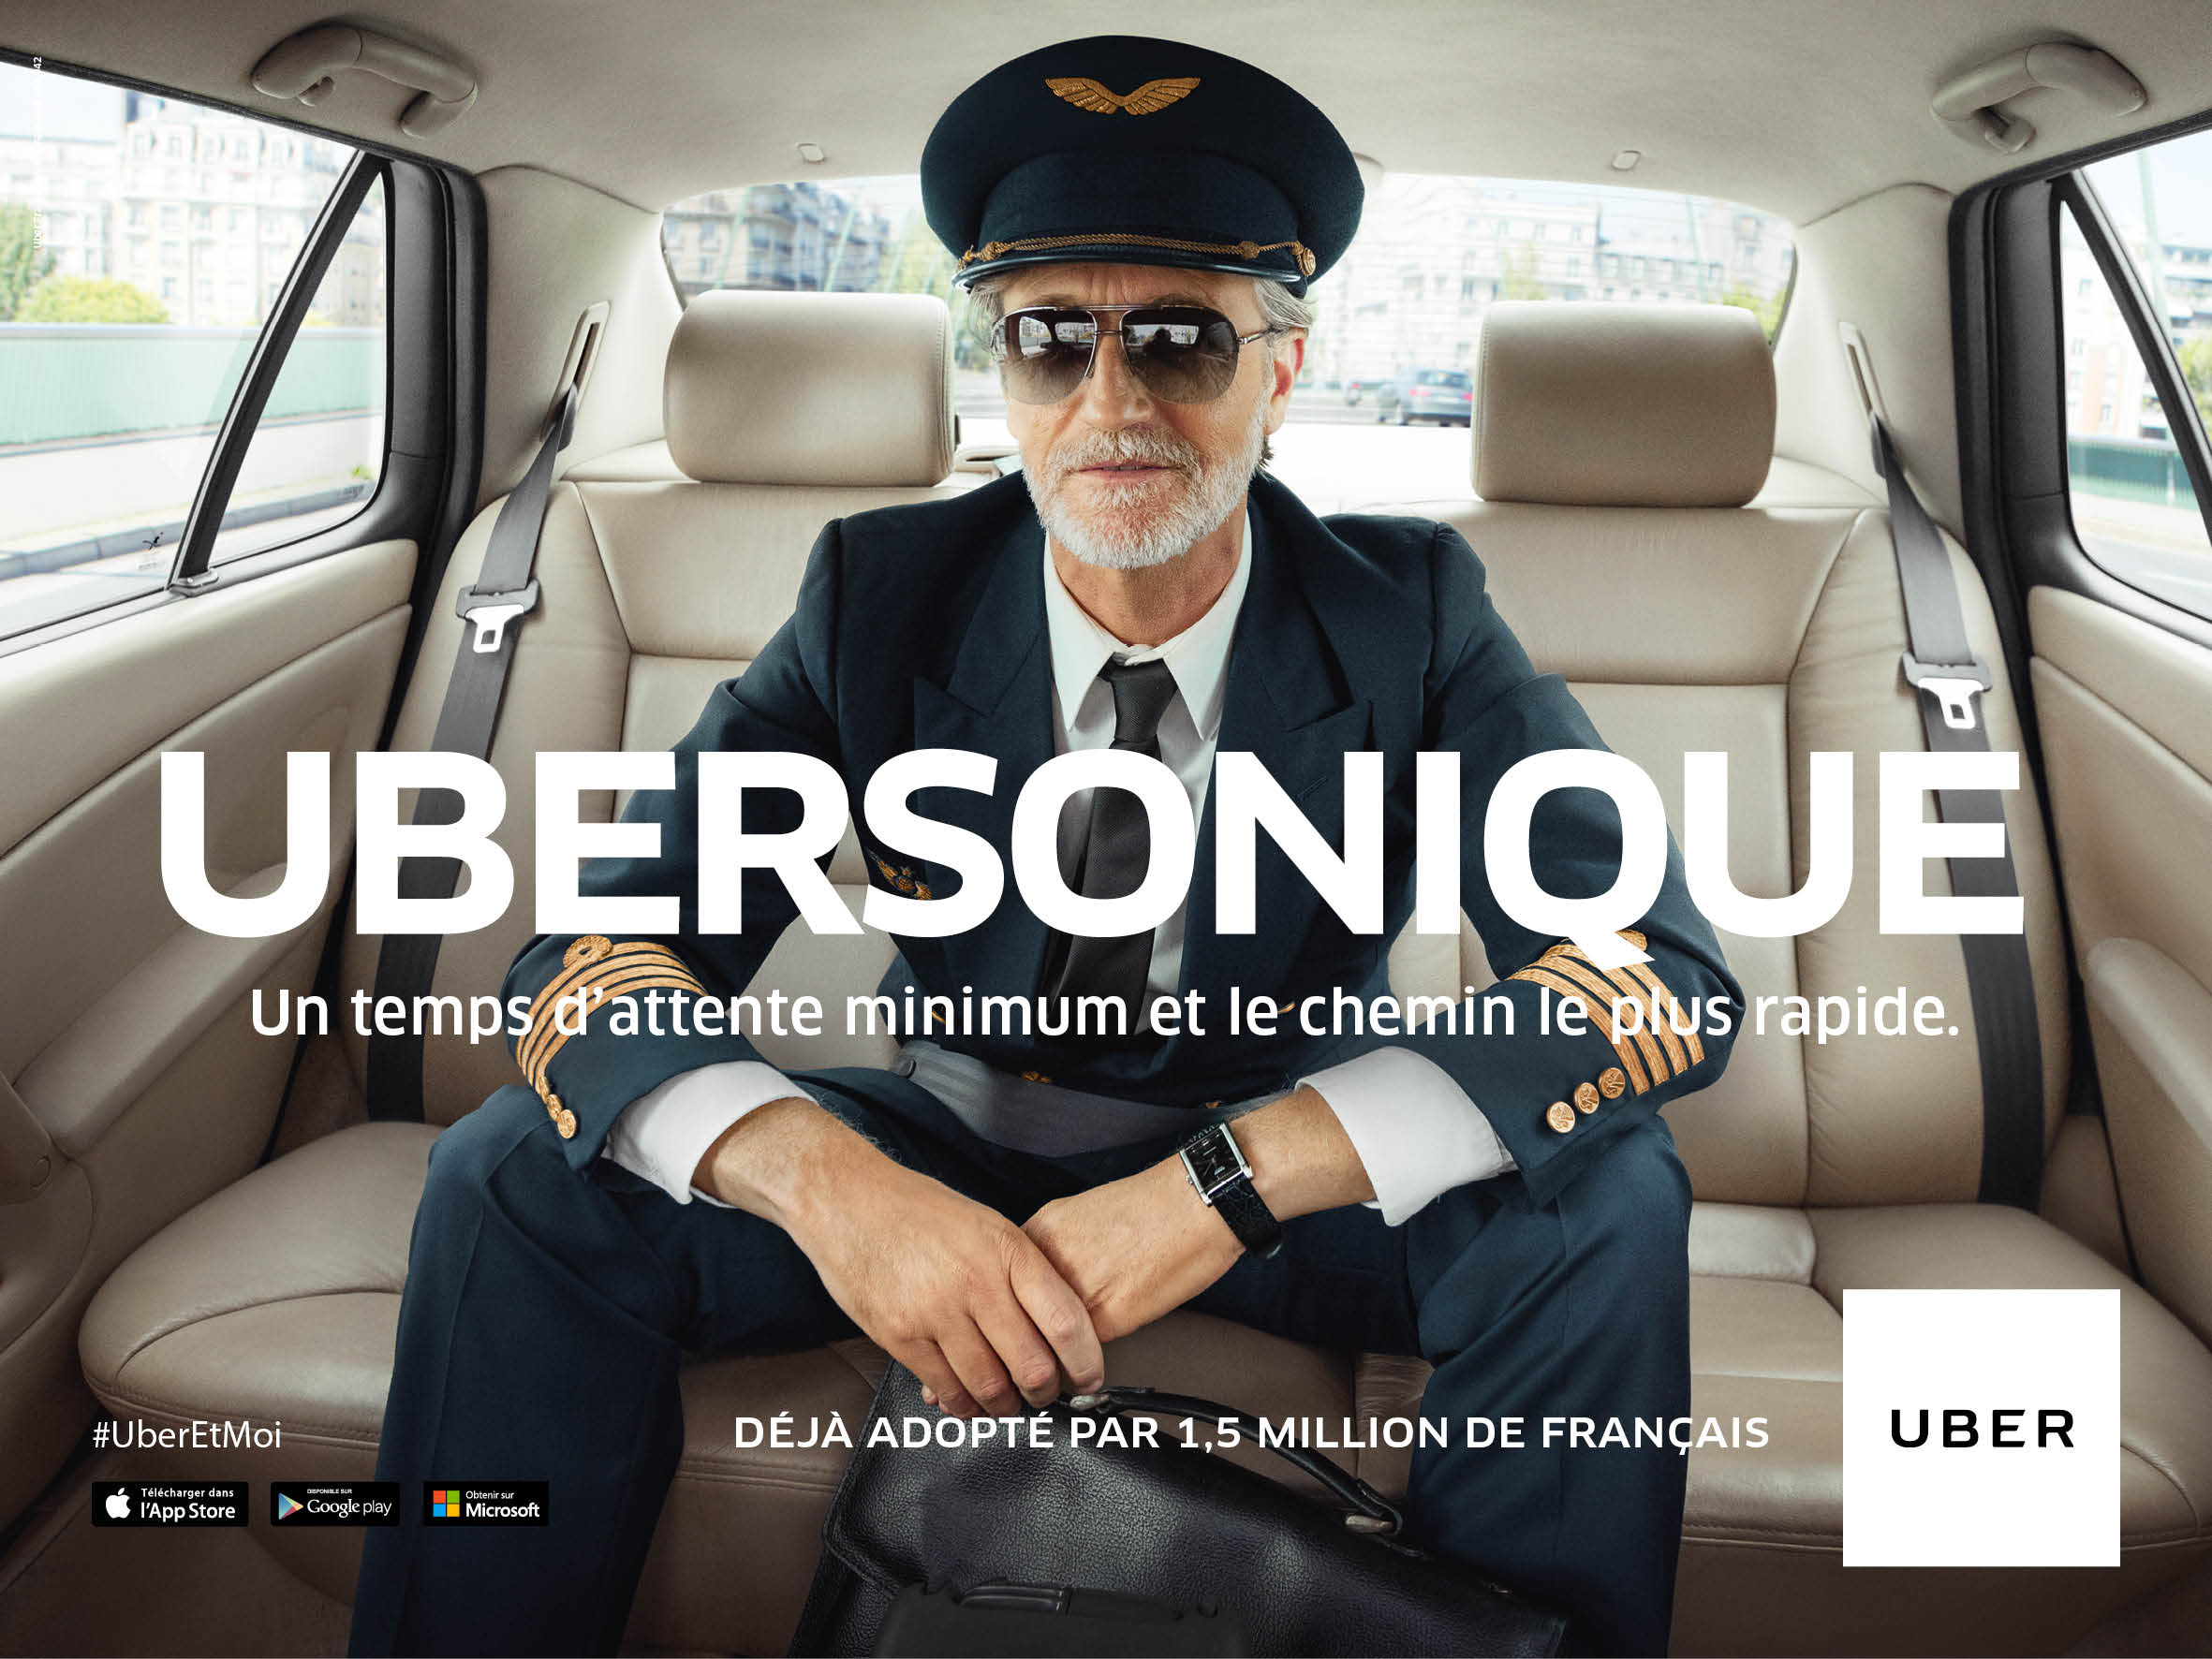 uber-france-publicite-marketing-application-utilisateurs-passagers-mars-2016-agence-marcel-publicis-6